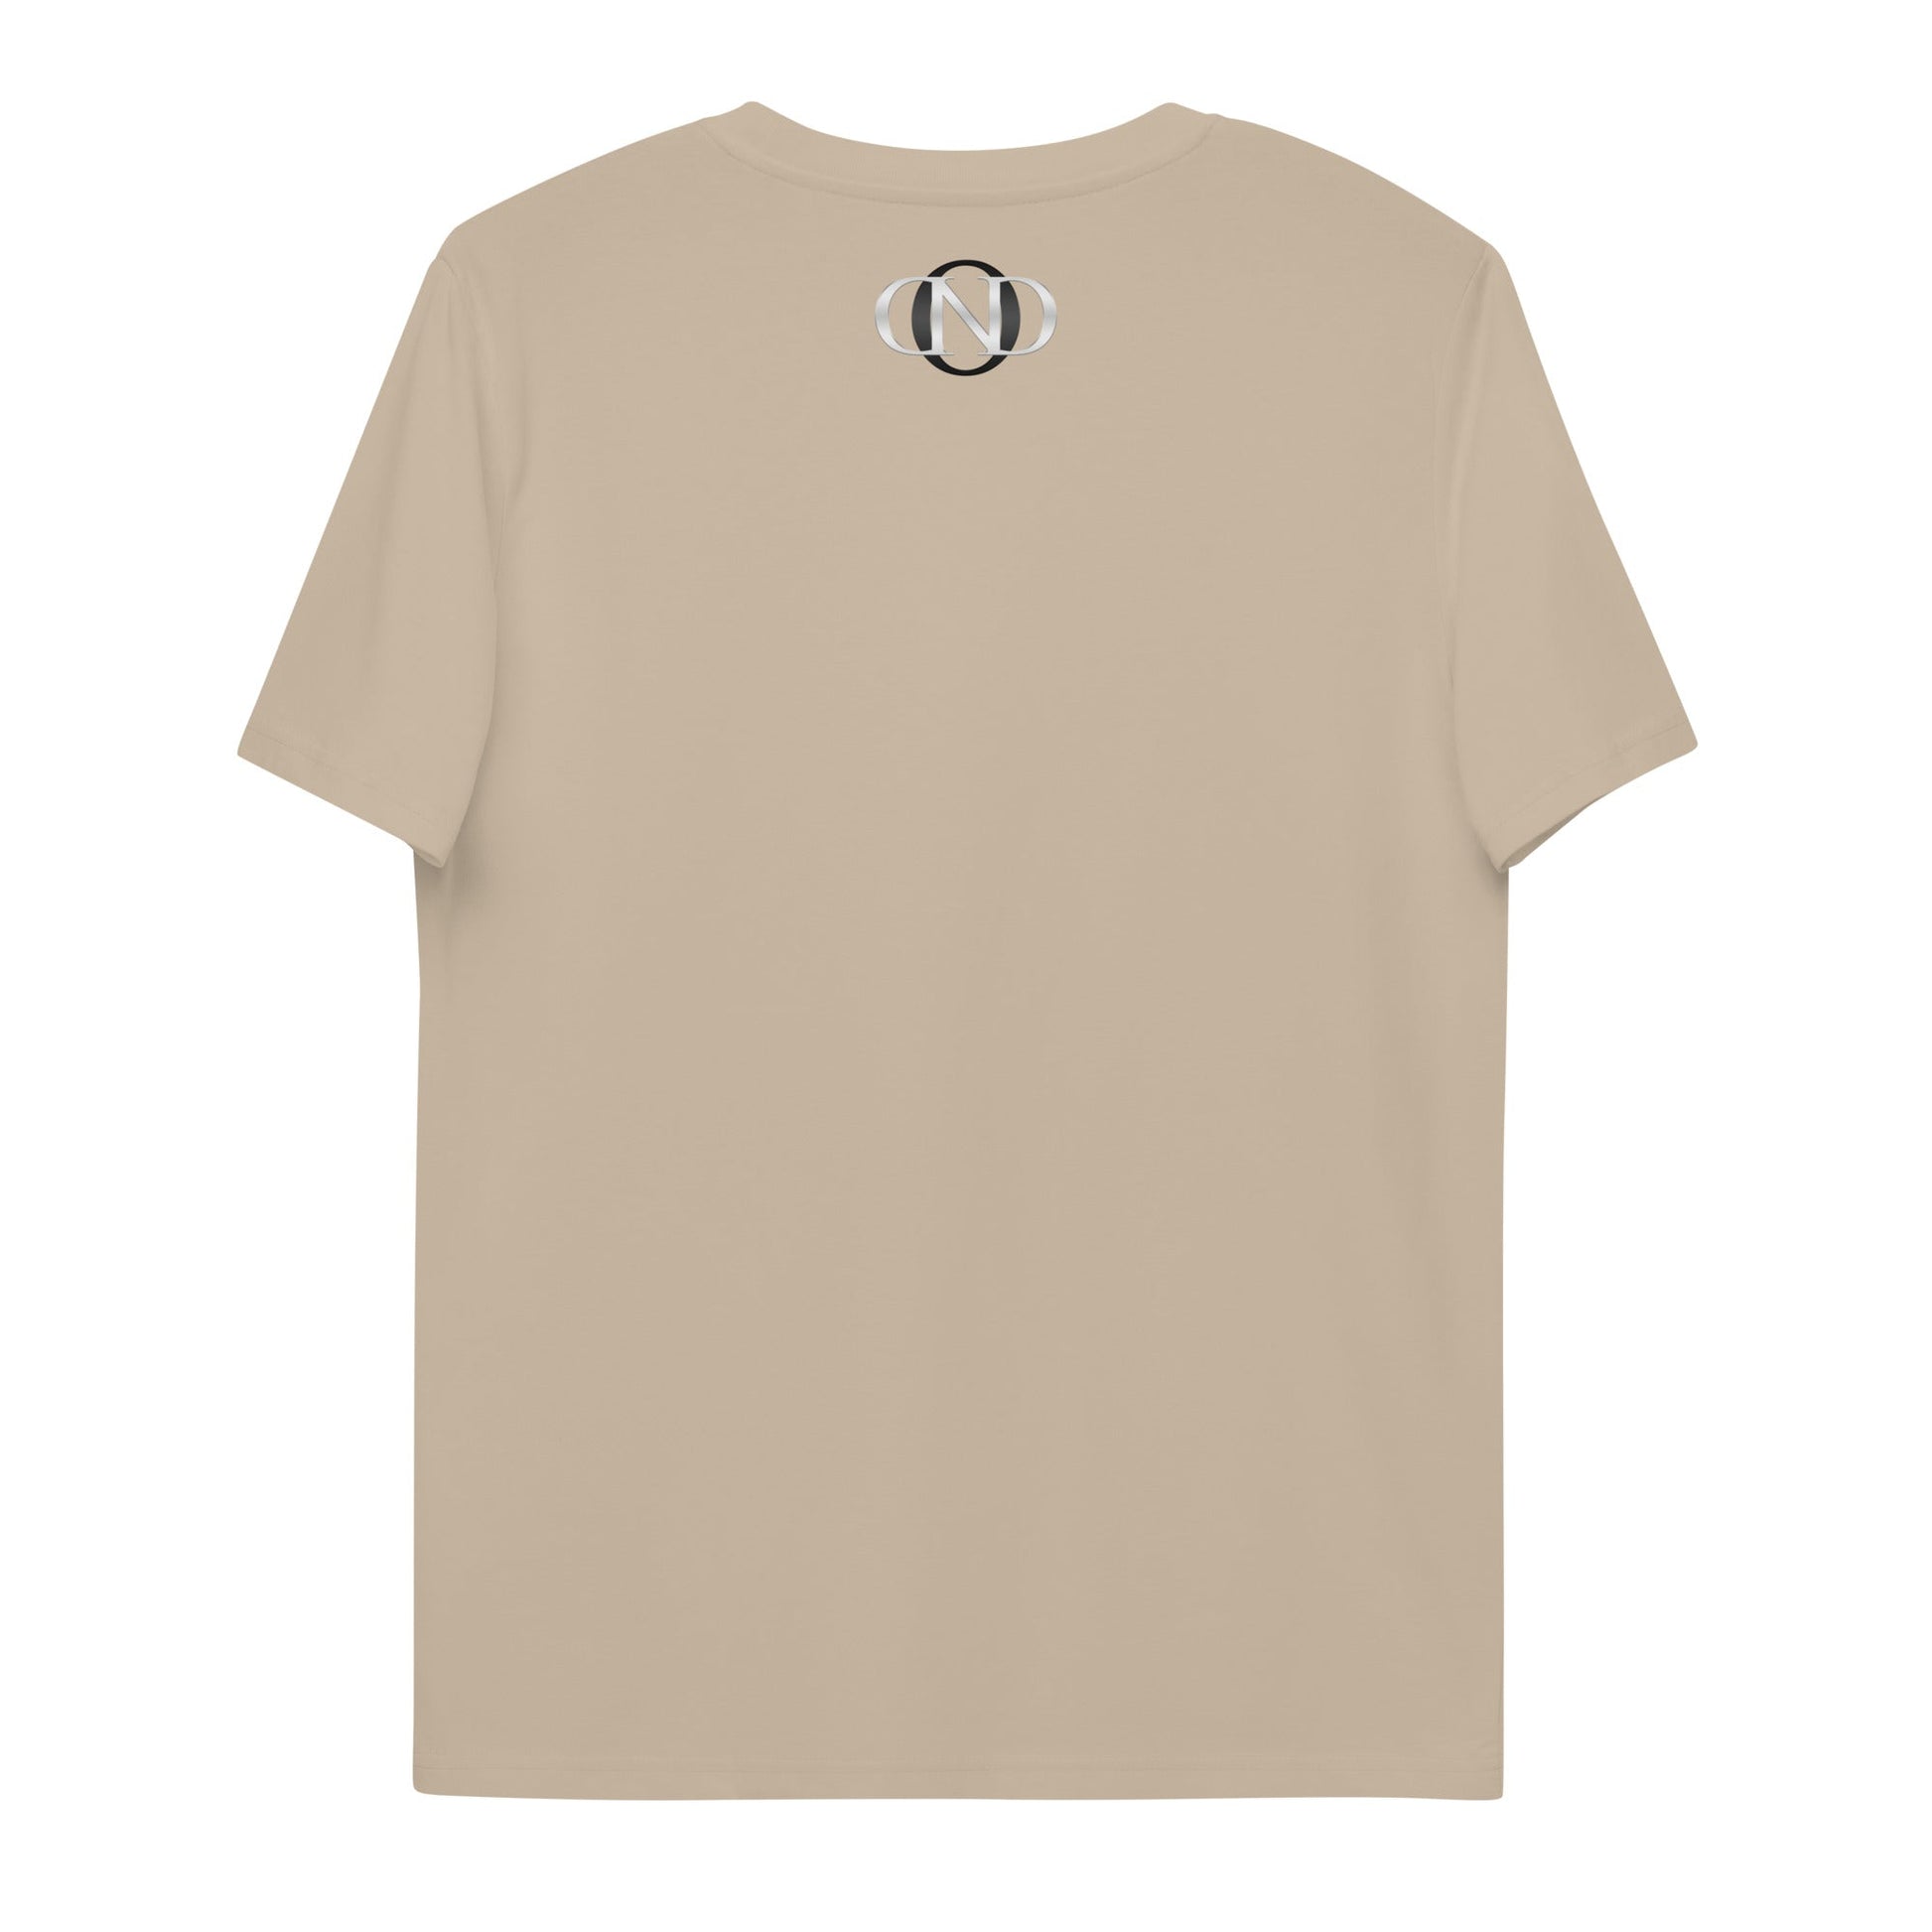 20 Neduz Designs Unisex Socialliberalerna Plain T-Shirt -